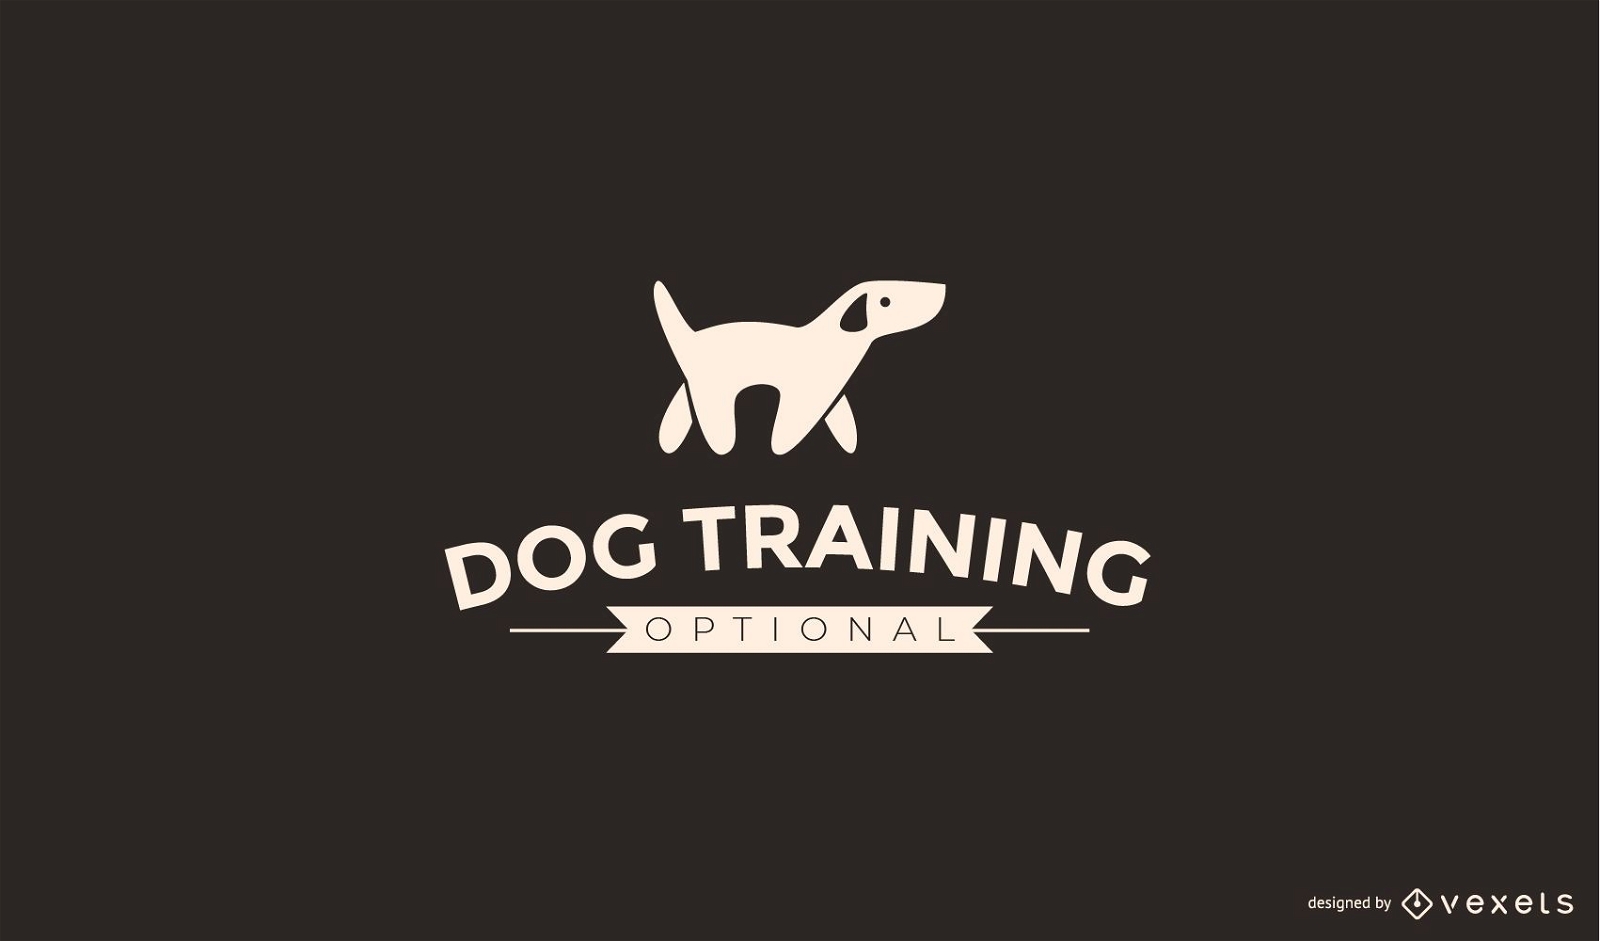 Dog training logo template